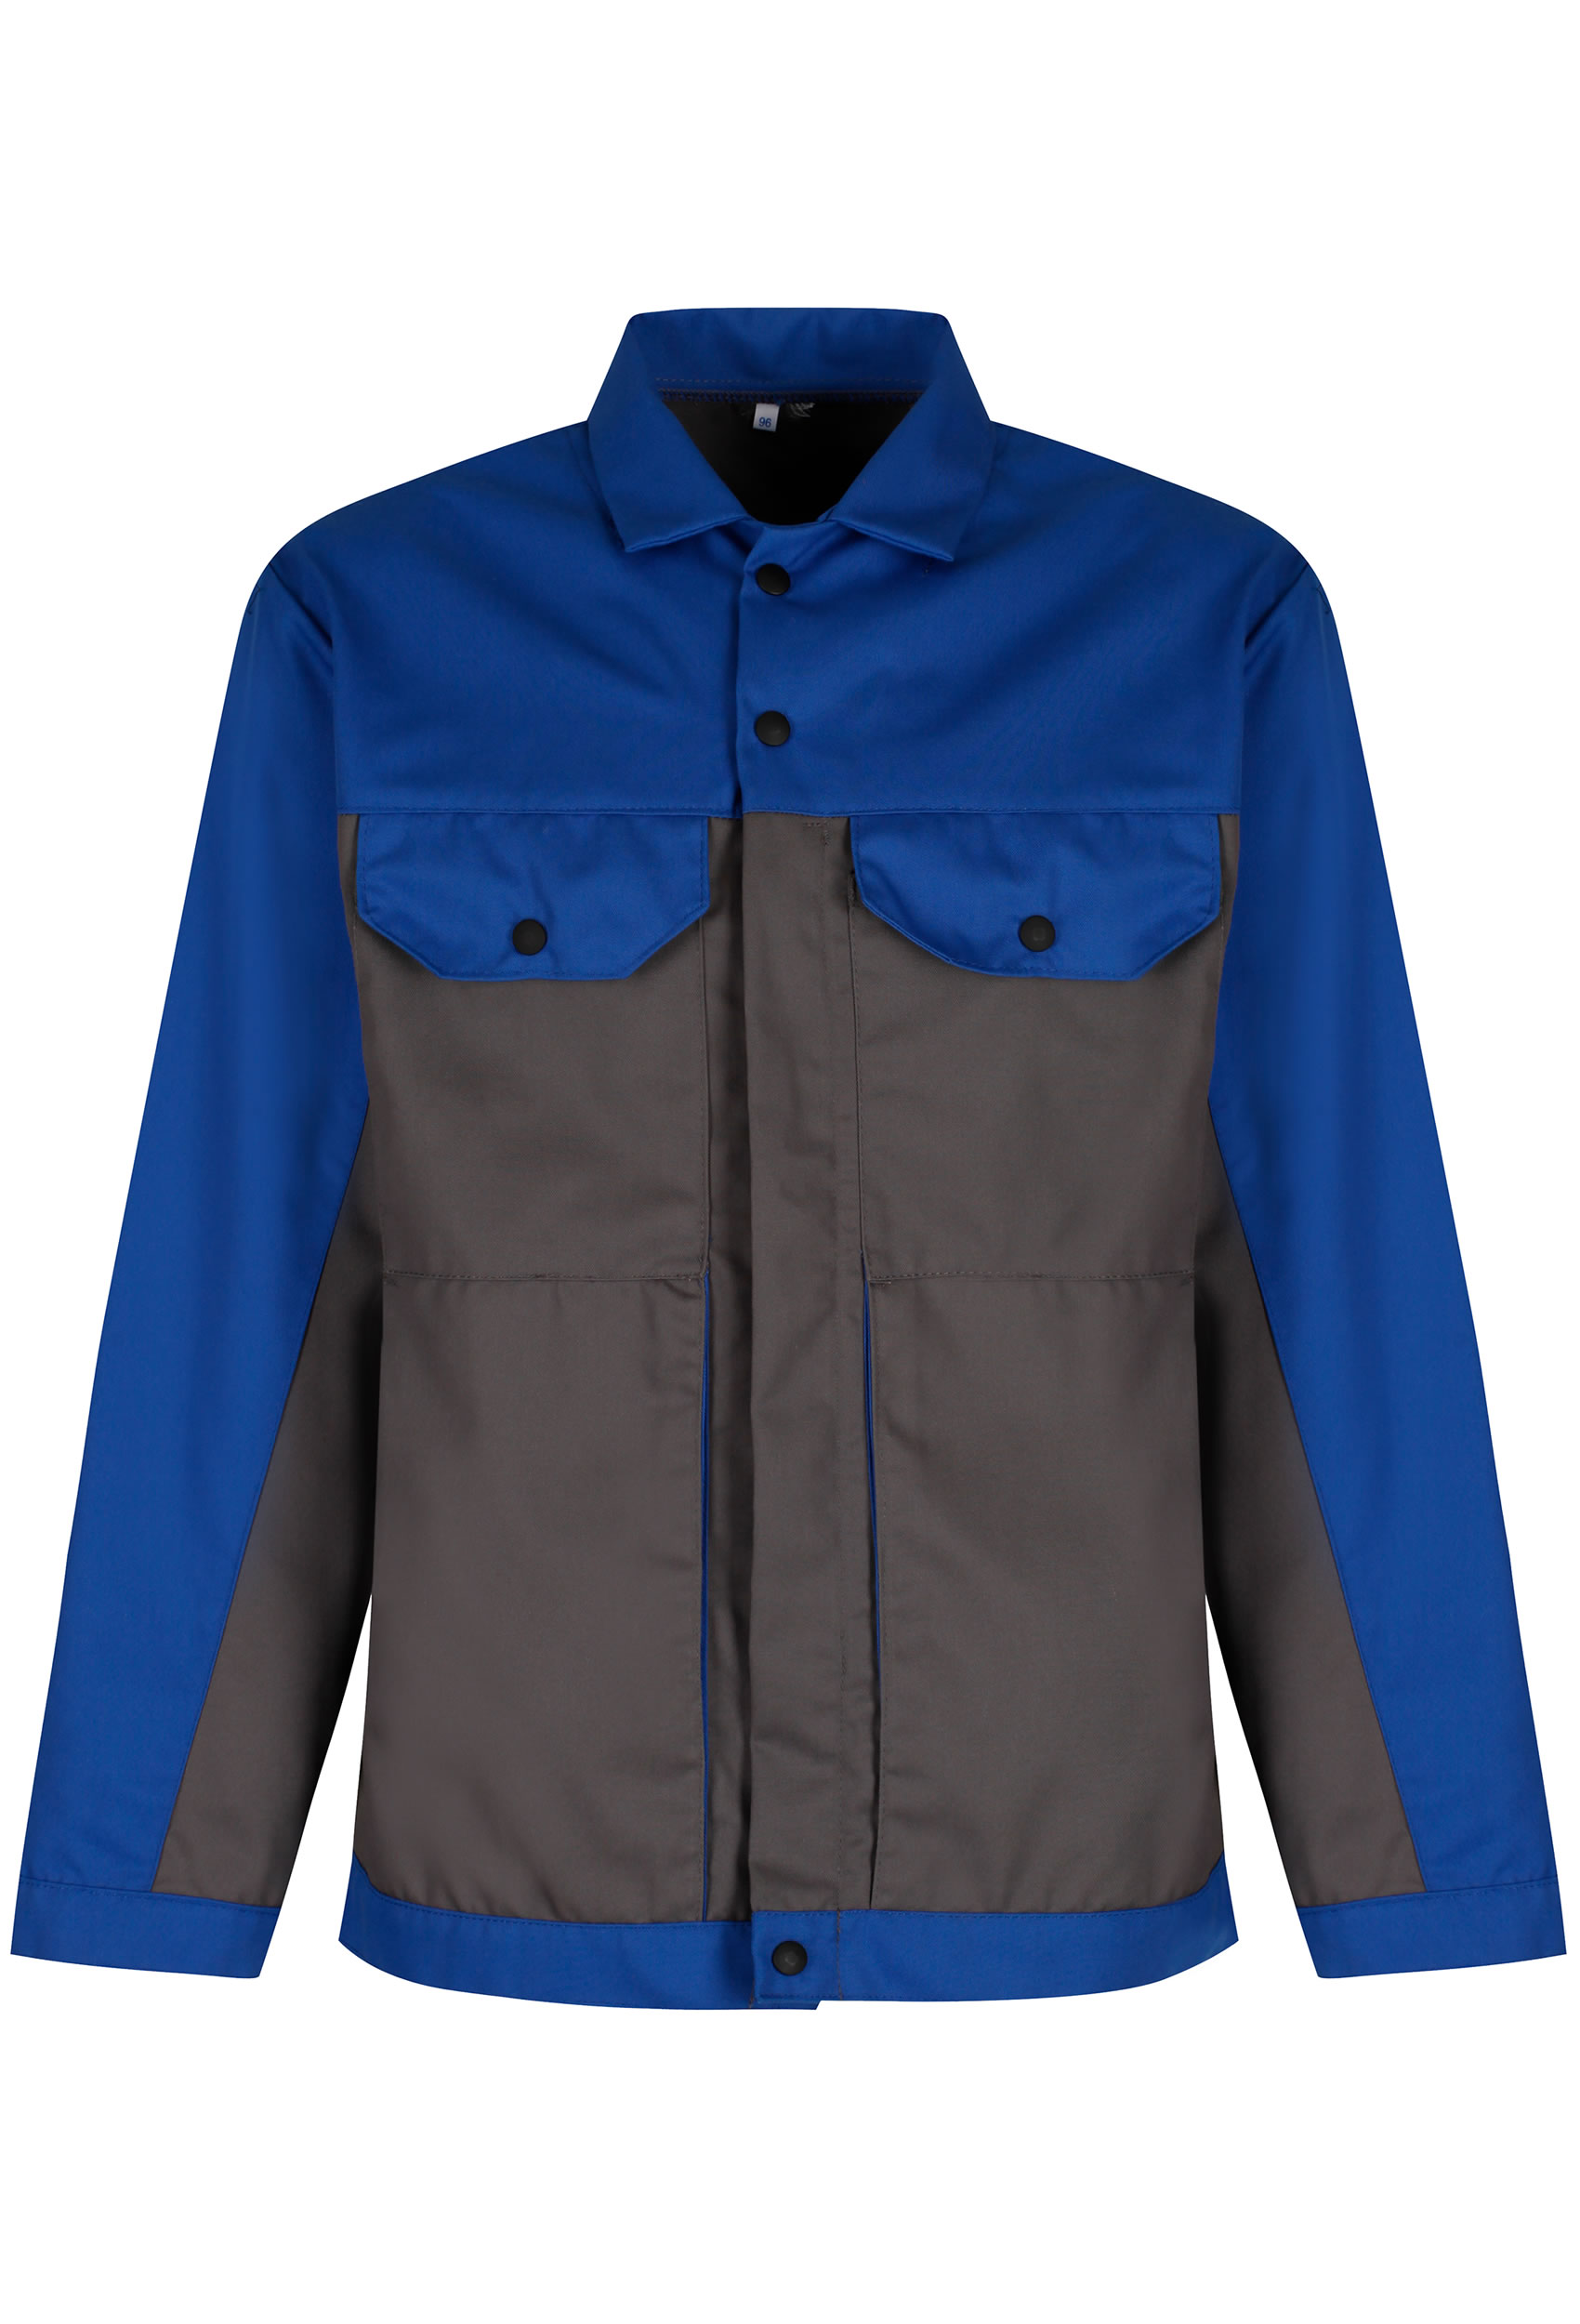 Style 4782 Two-tone flame retardant jacket.jpg - Workwear Garments - CLEAN Services